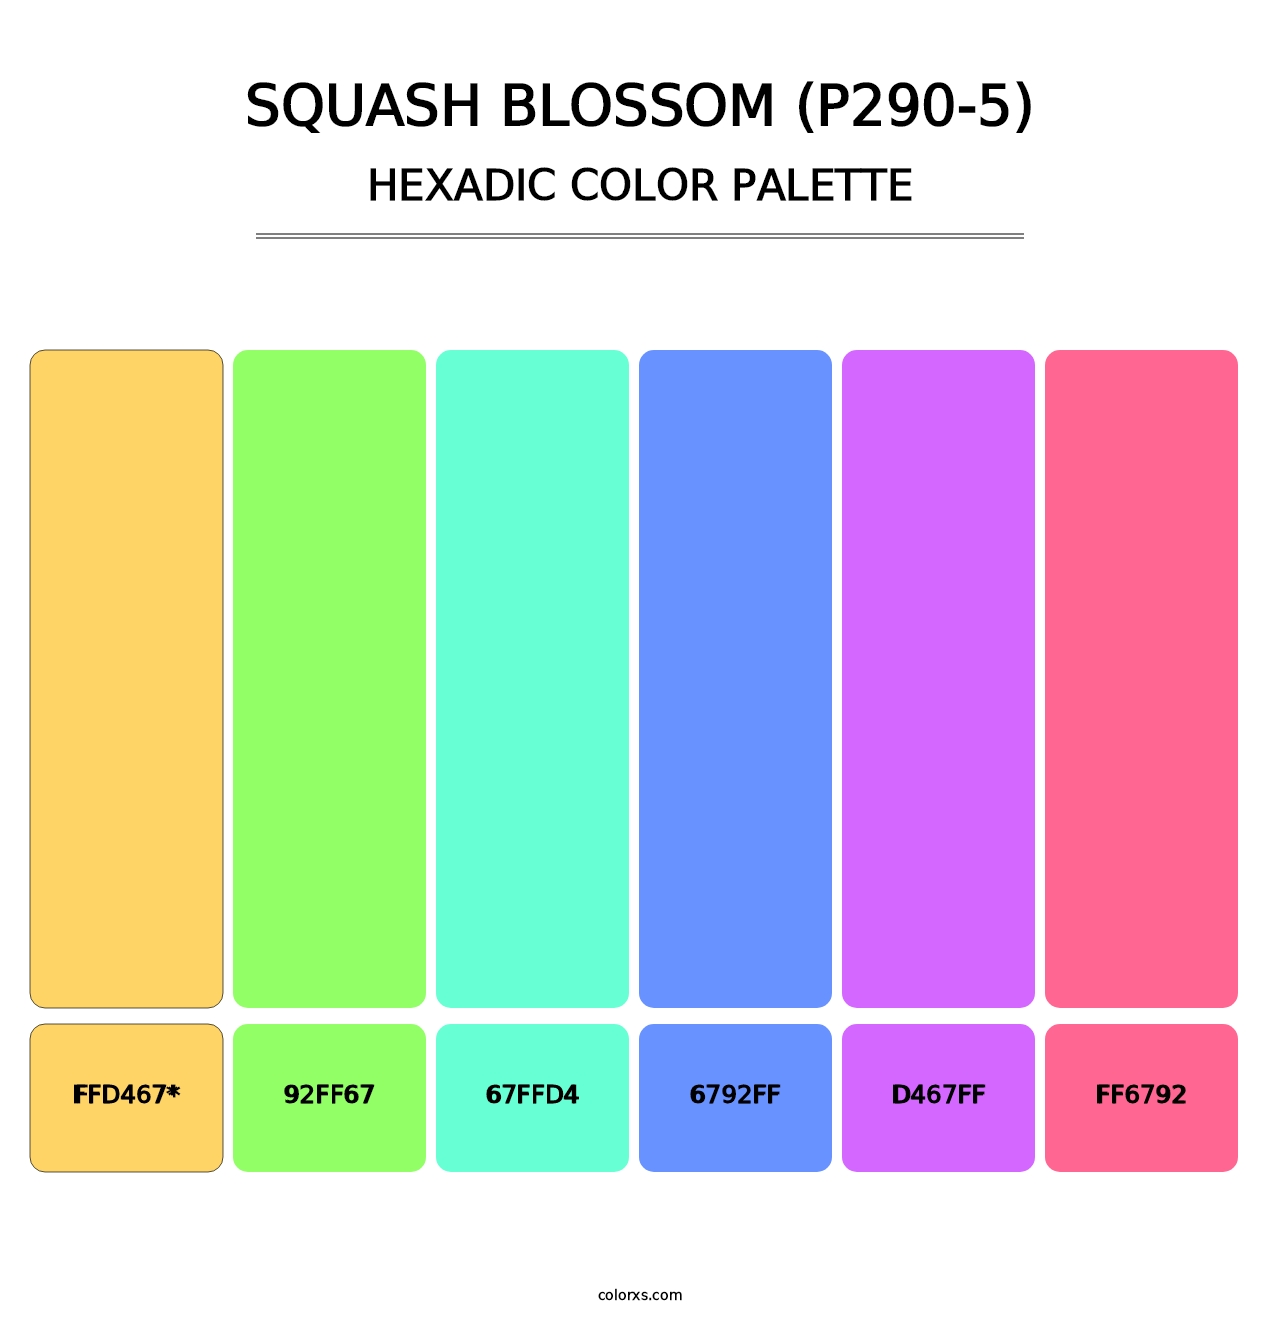 Squash Blossom (P290-5) - Hexadic Color Palette